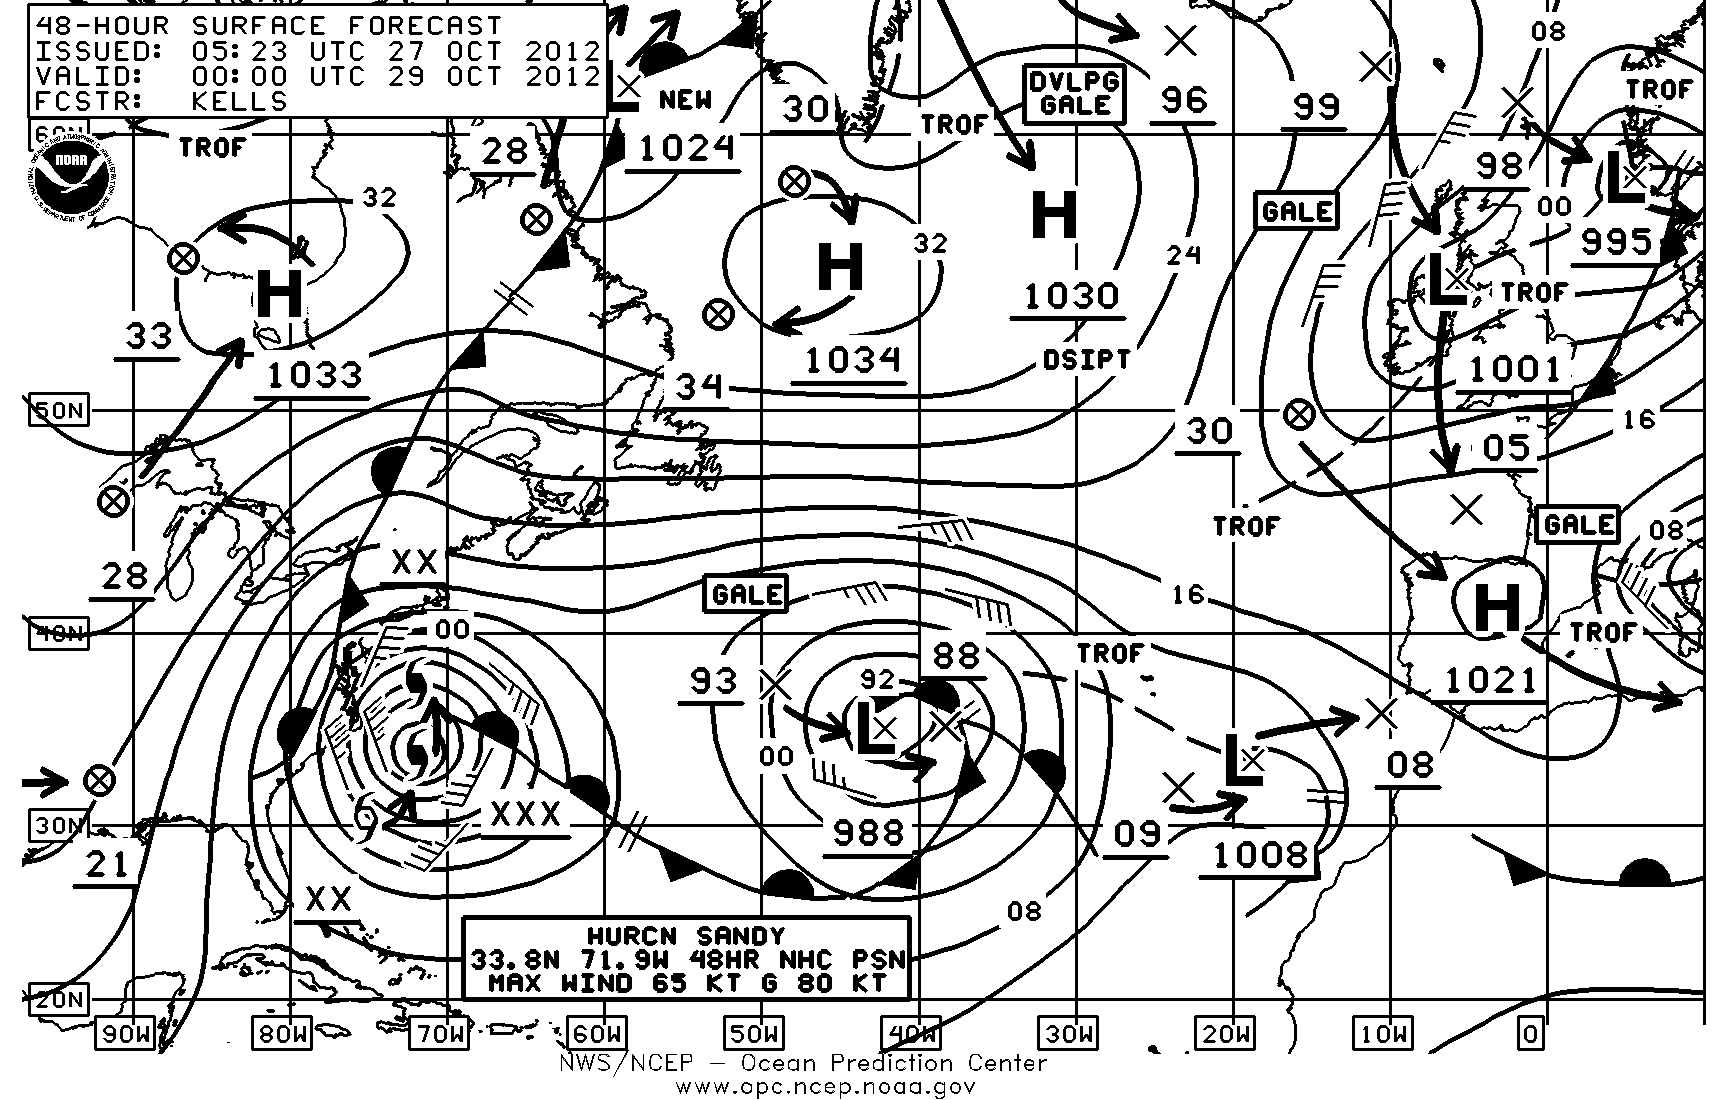 48 Hour Atlantic Surface Forecast